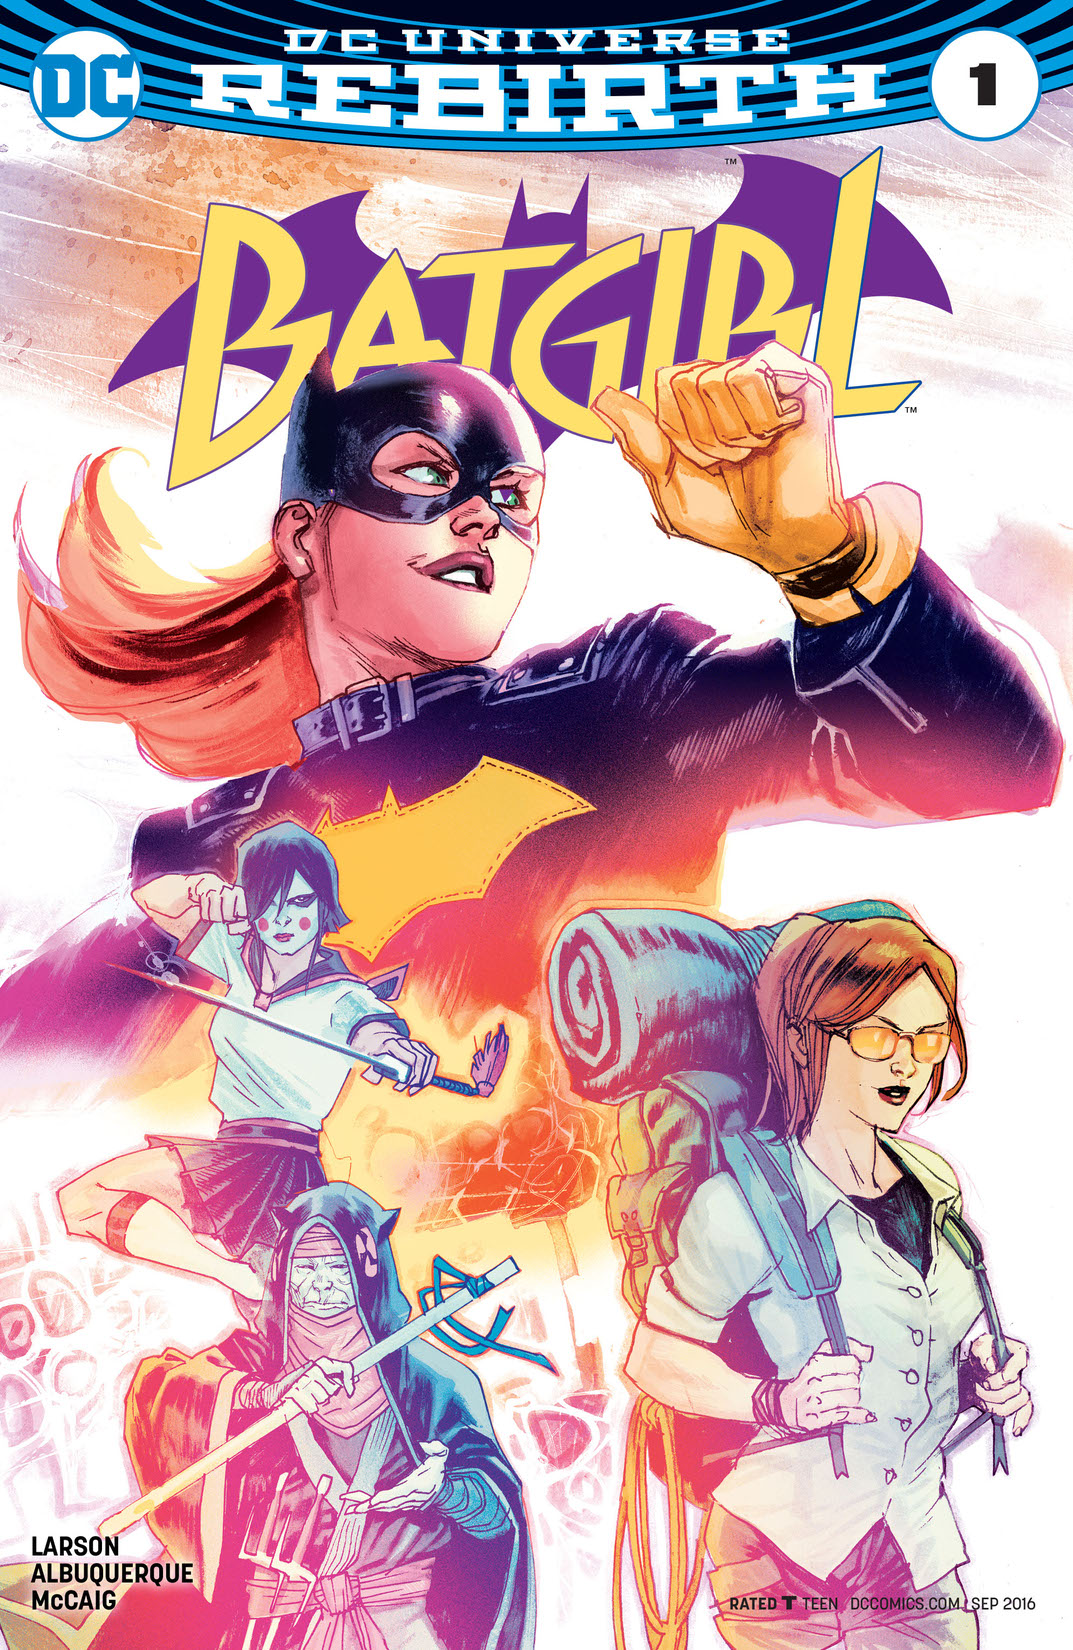 Batgirl (2016-) #1 preview images